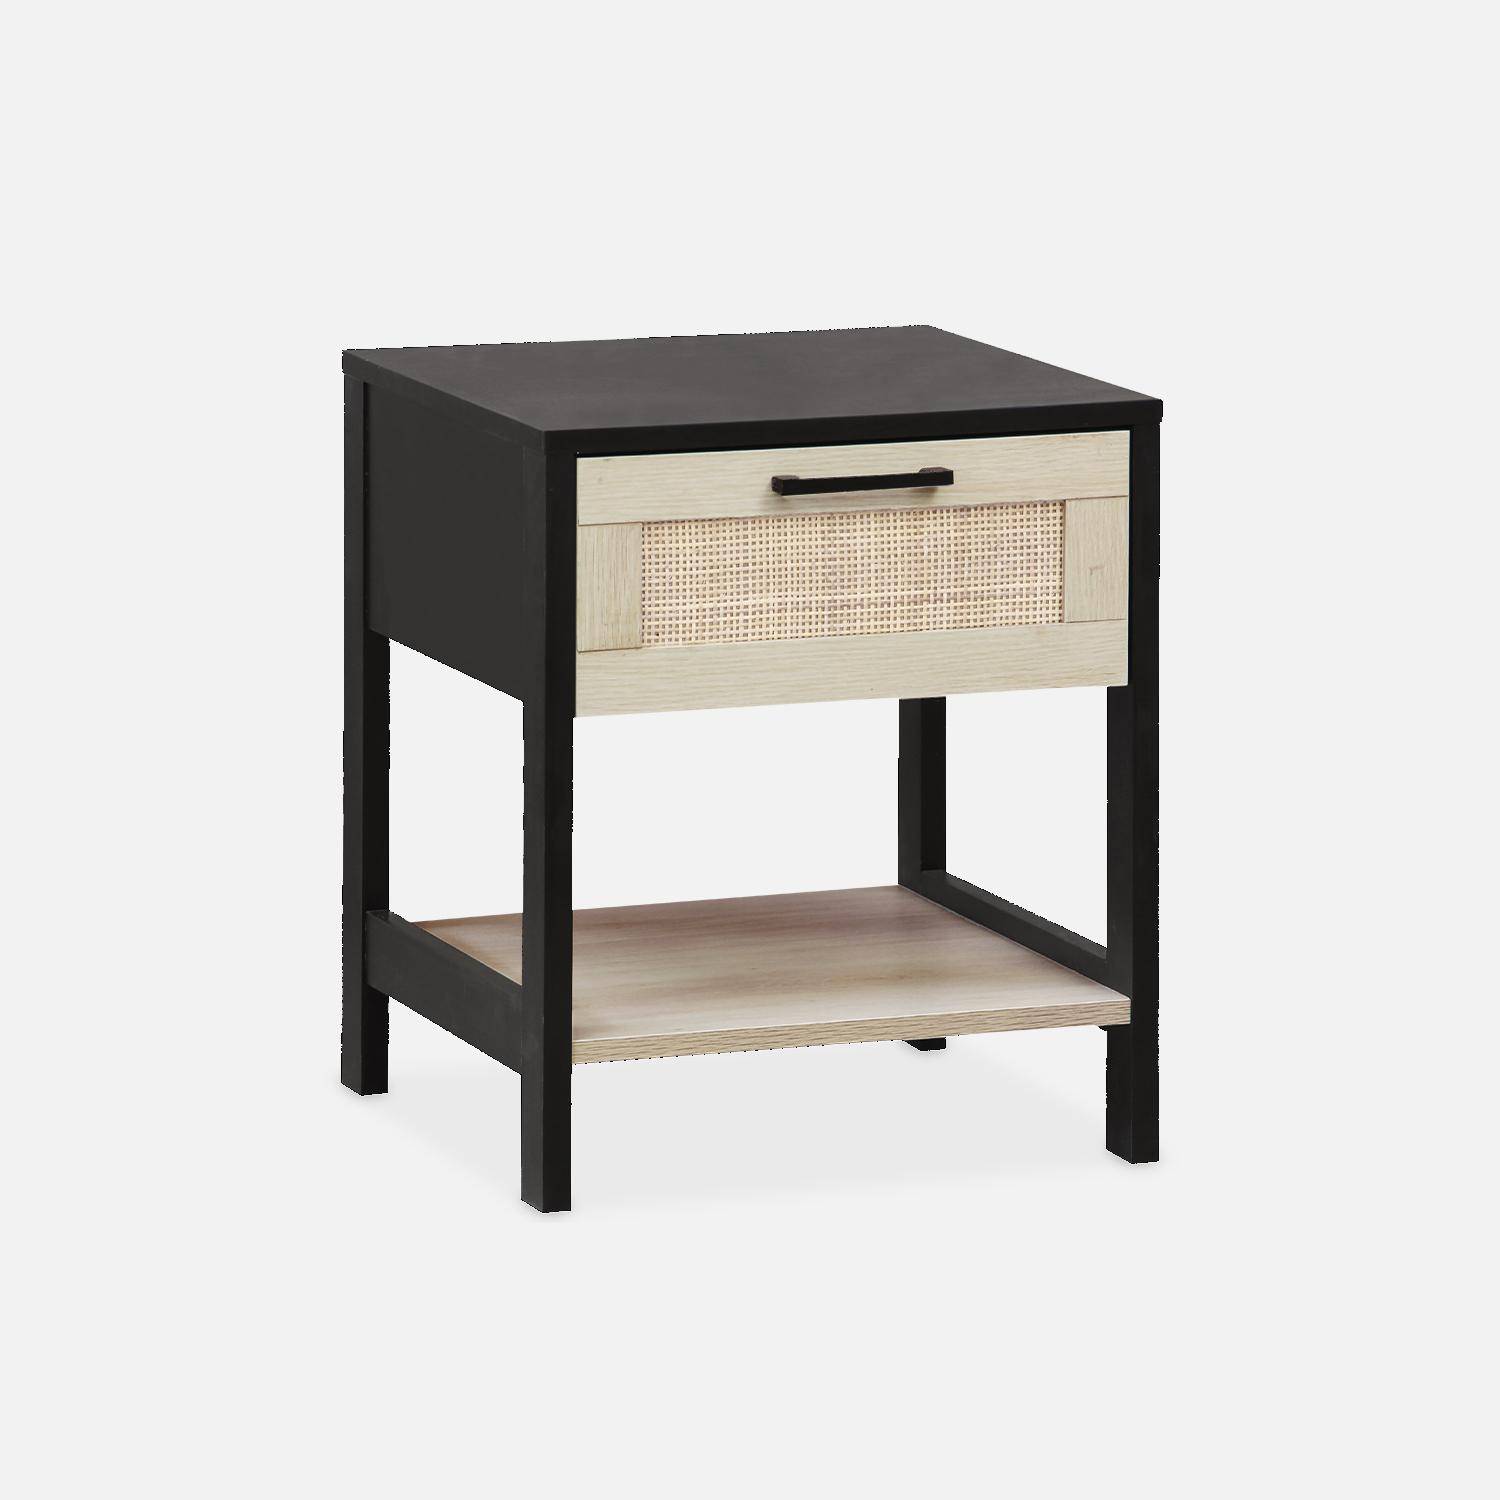 Black and cane bedside table 40 x 40 x 48cm - Bianca - 1 drawer, 1 shelf,sweeek,Photo2